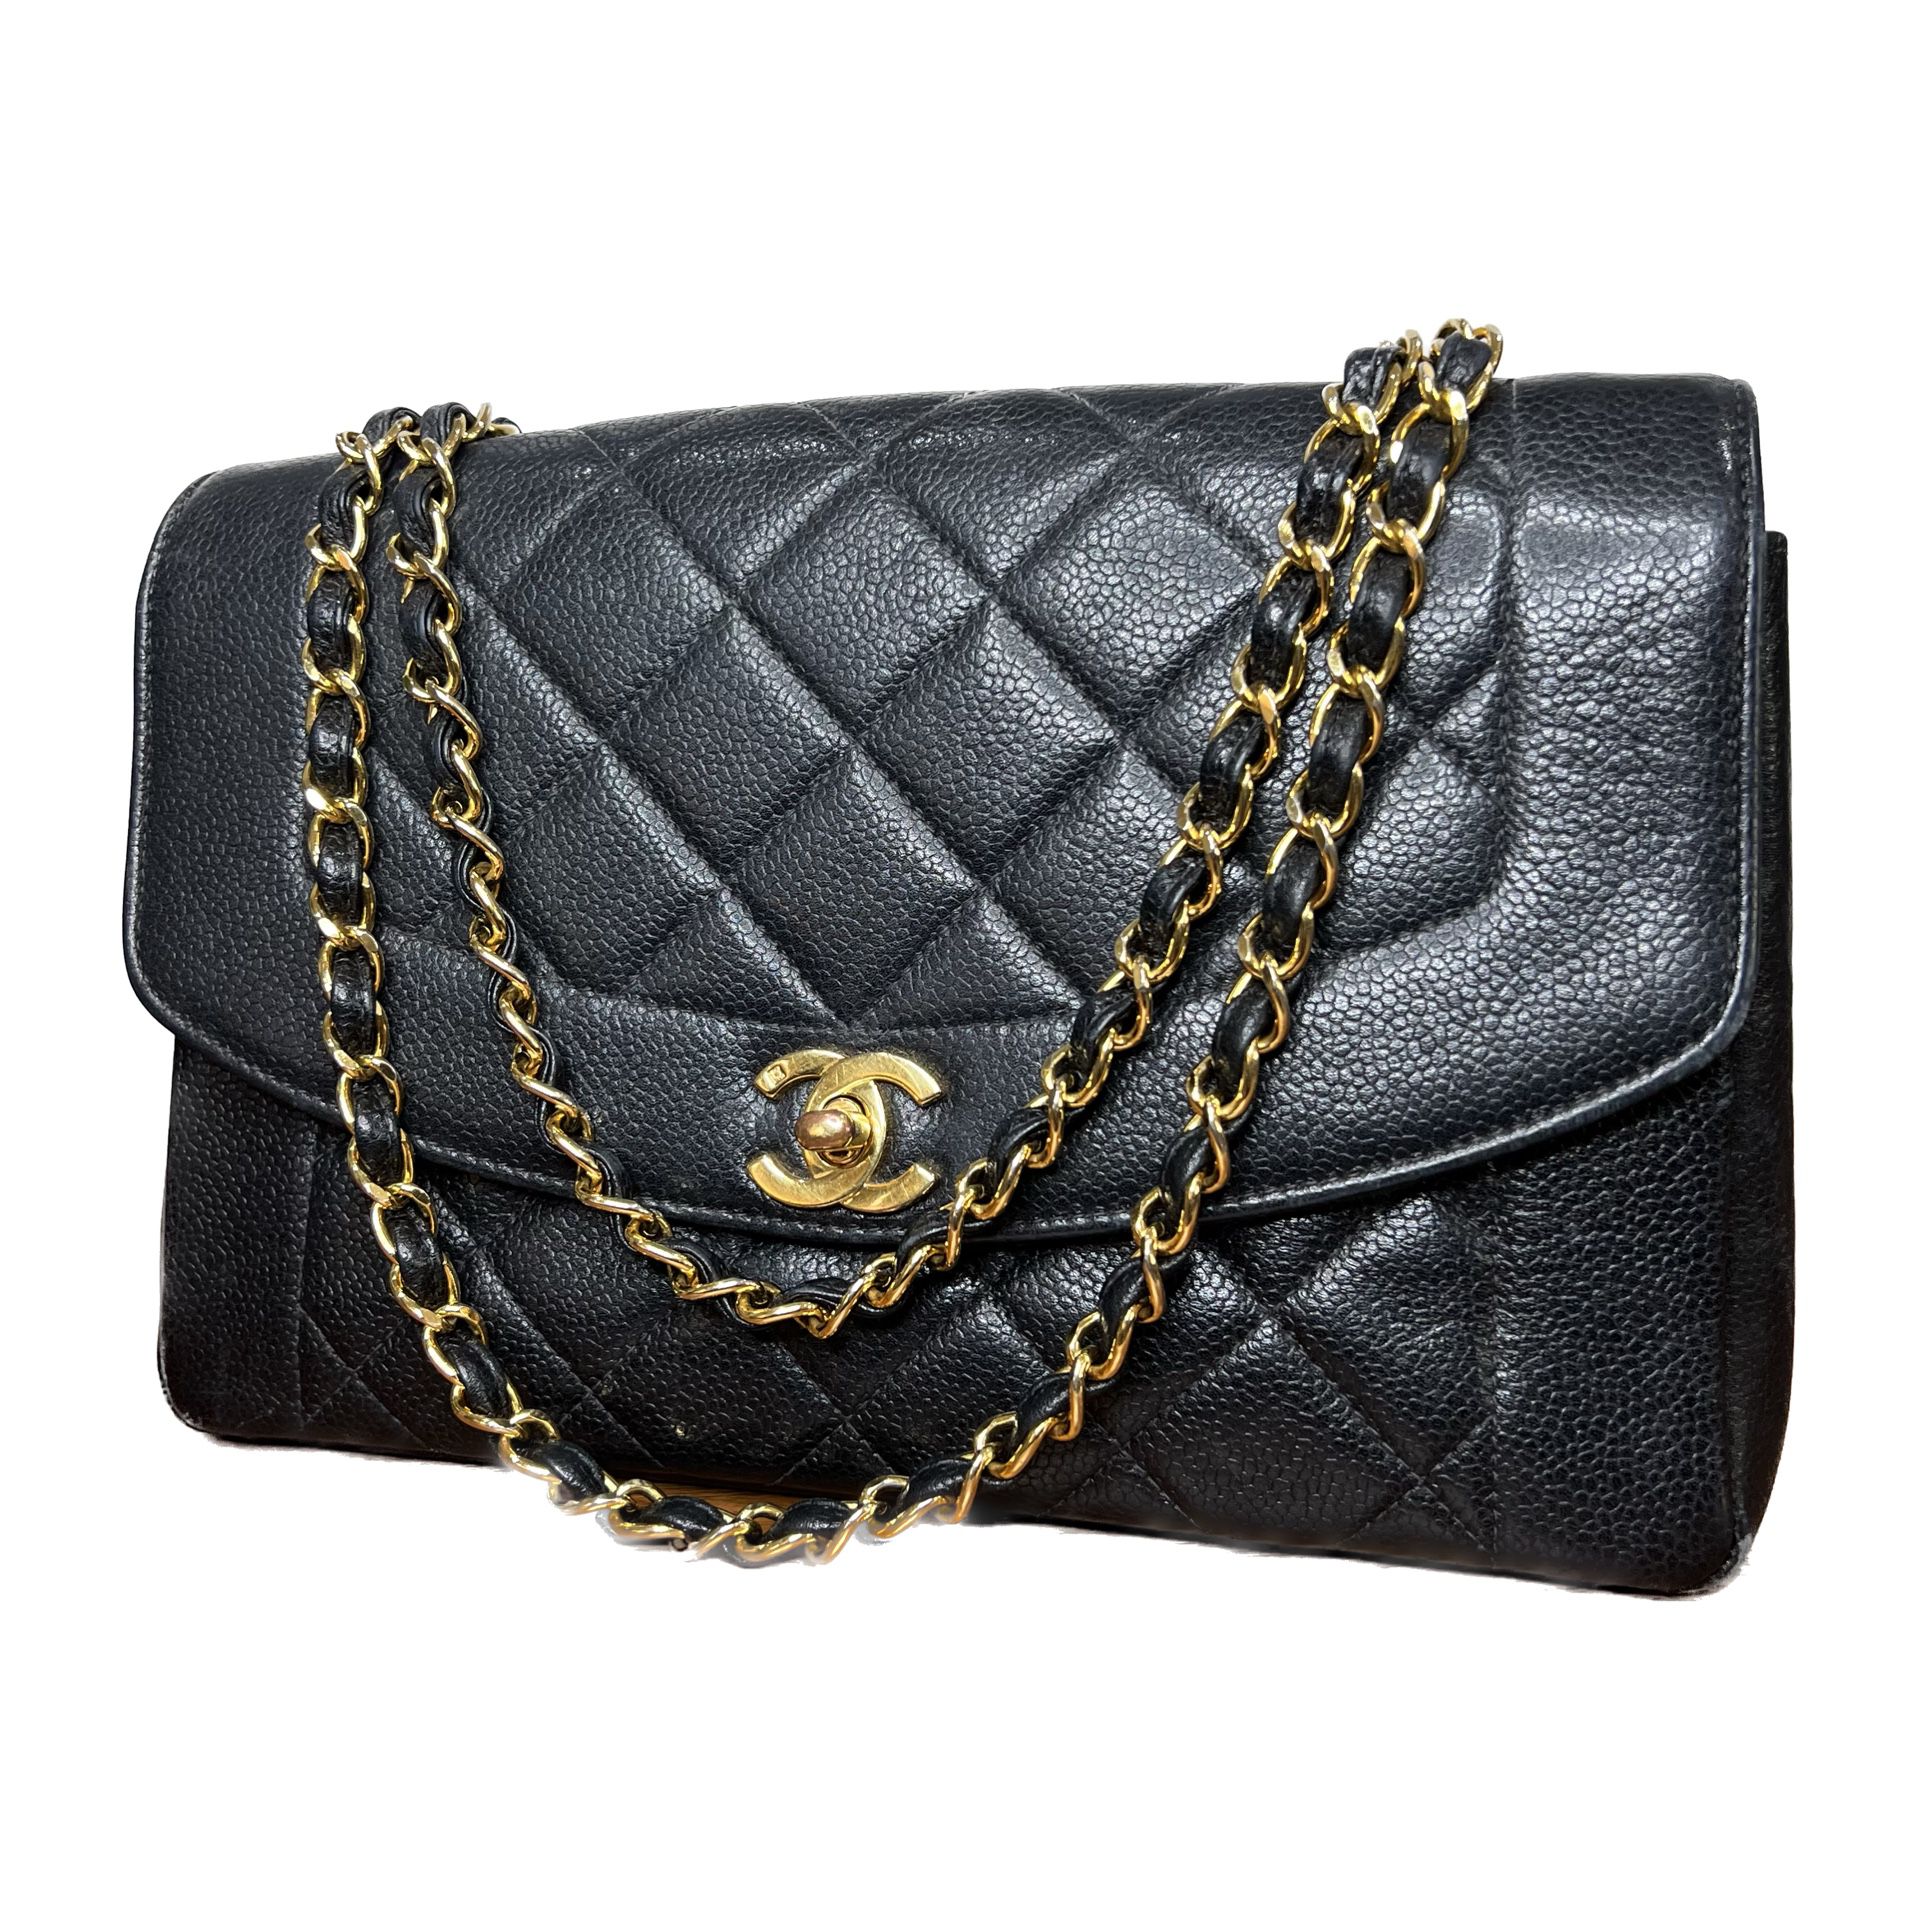 Vintage 1996-1997 Chanel Black Caviar Handbag